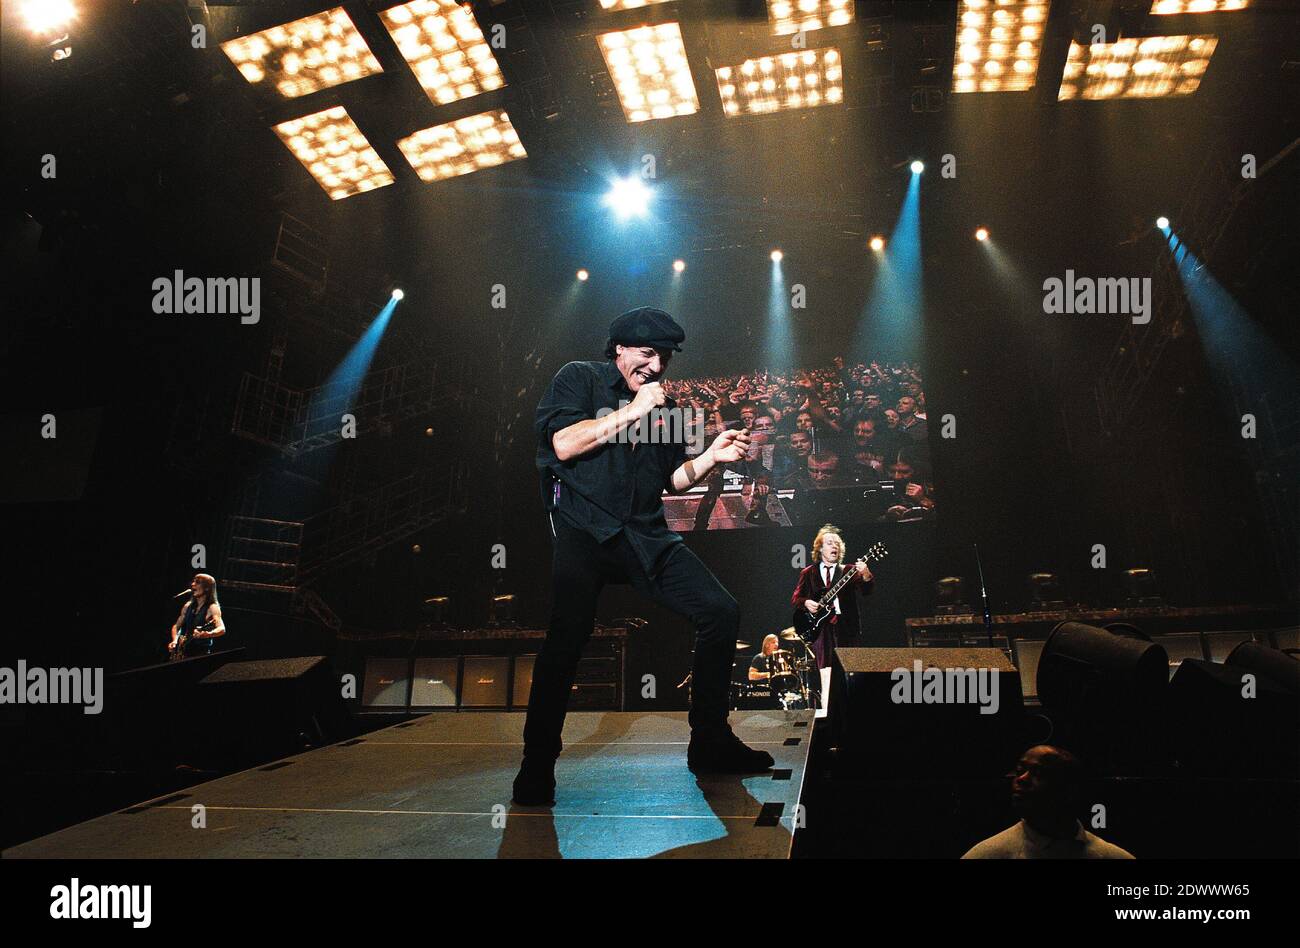 AC/DC in concert at the Birmingham NEC, UK. 28th November 2000 Stock Photo